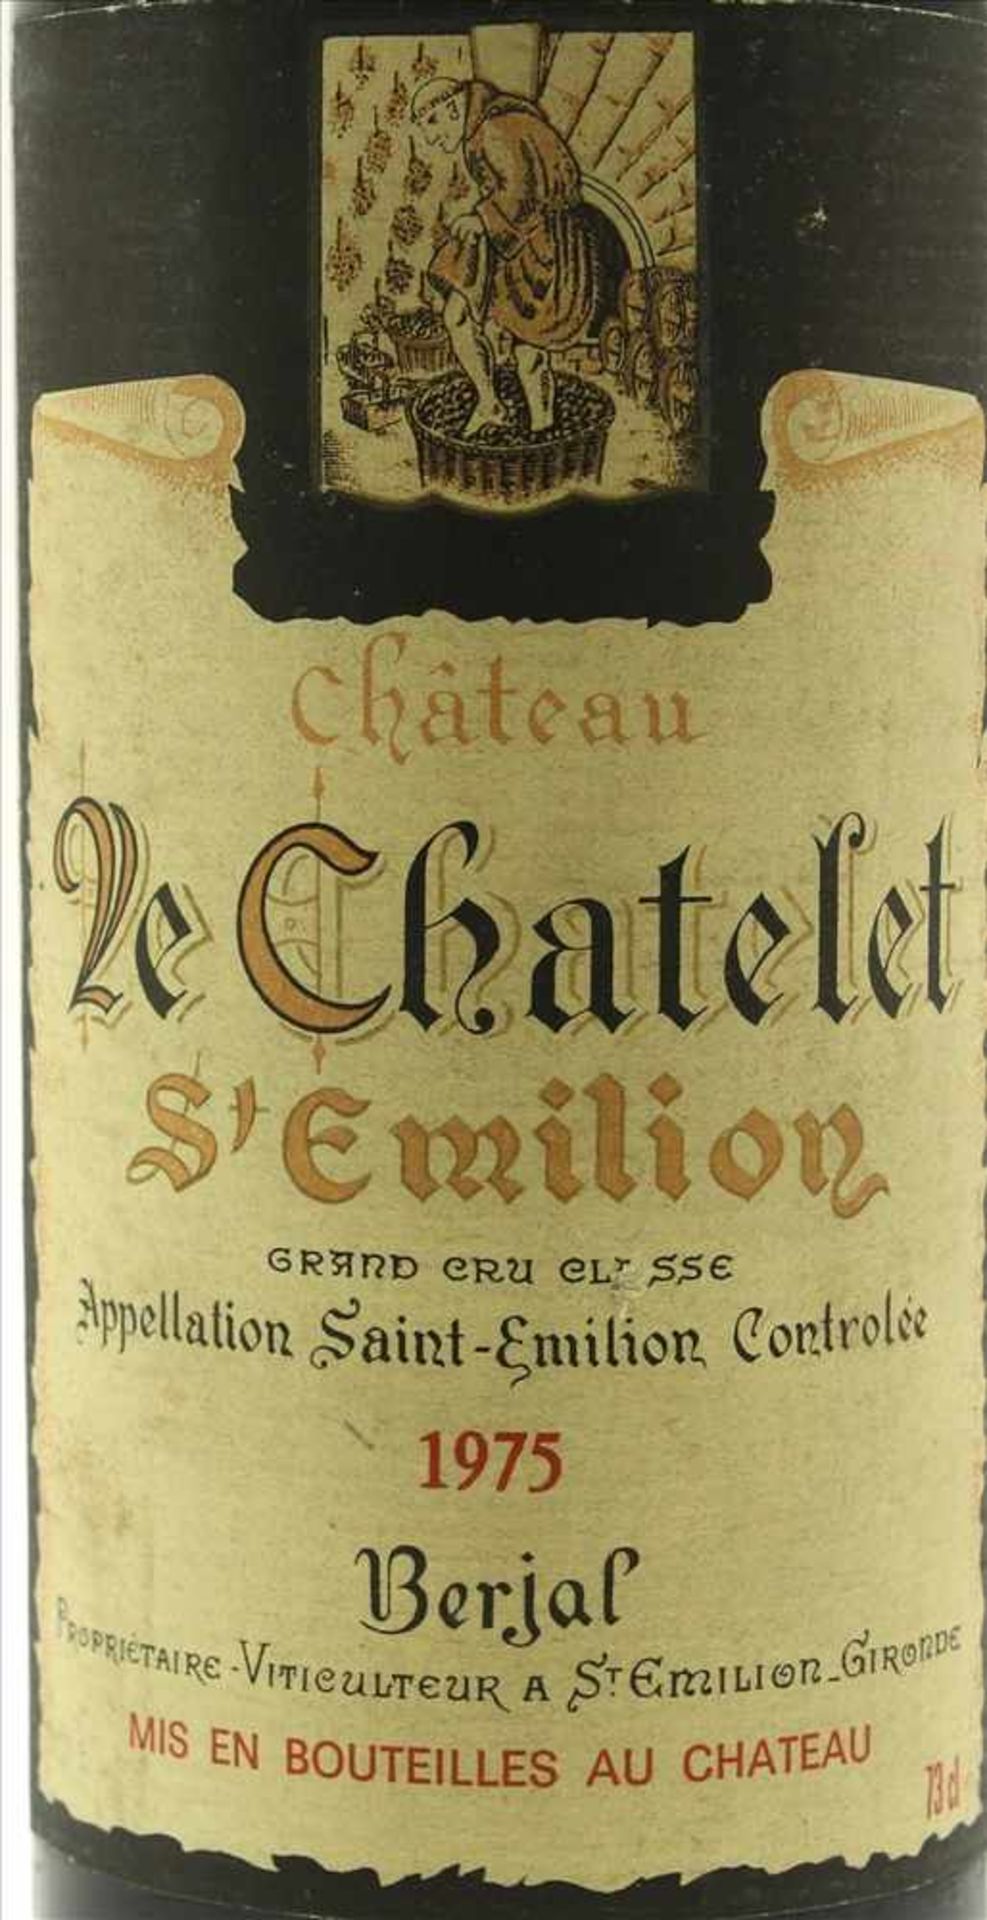 Chateau Le Chatelet 1975Grand Cru Classé. 0,73 Liter Flasche. Füllstand Anfang Hals wie - Image 2 of 3